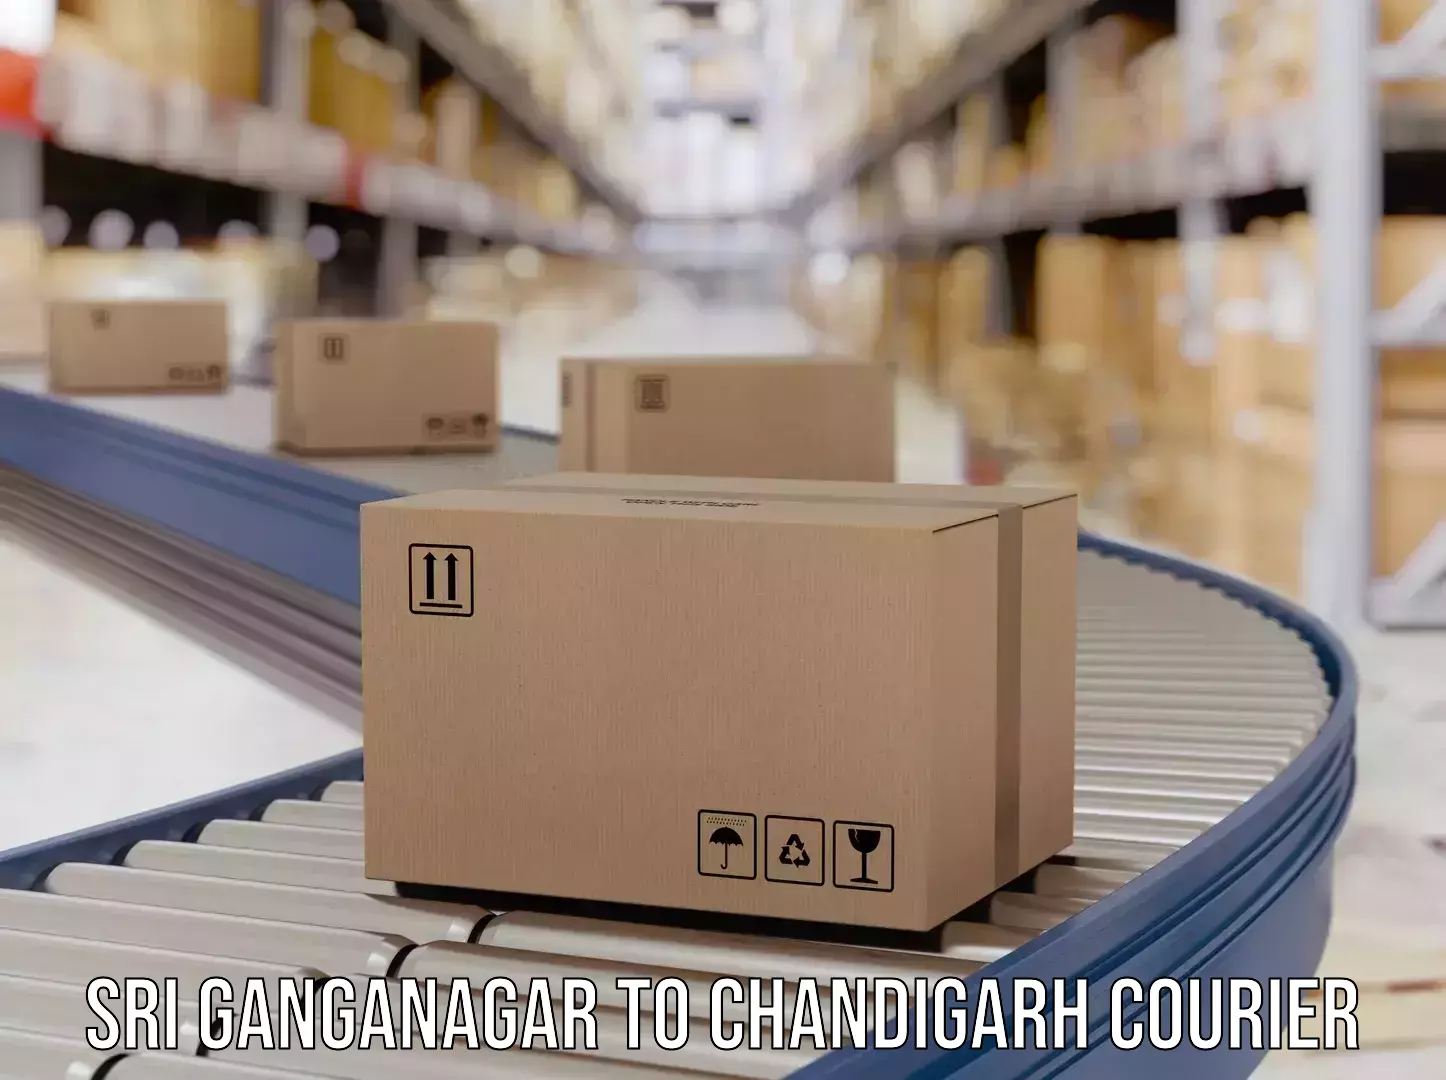 Doorstep delivery service Sri Ganganagar to Chandigarh